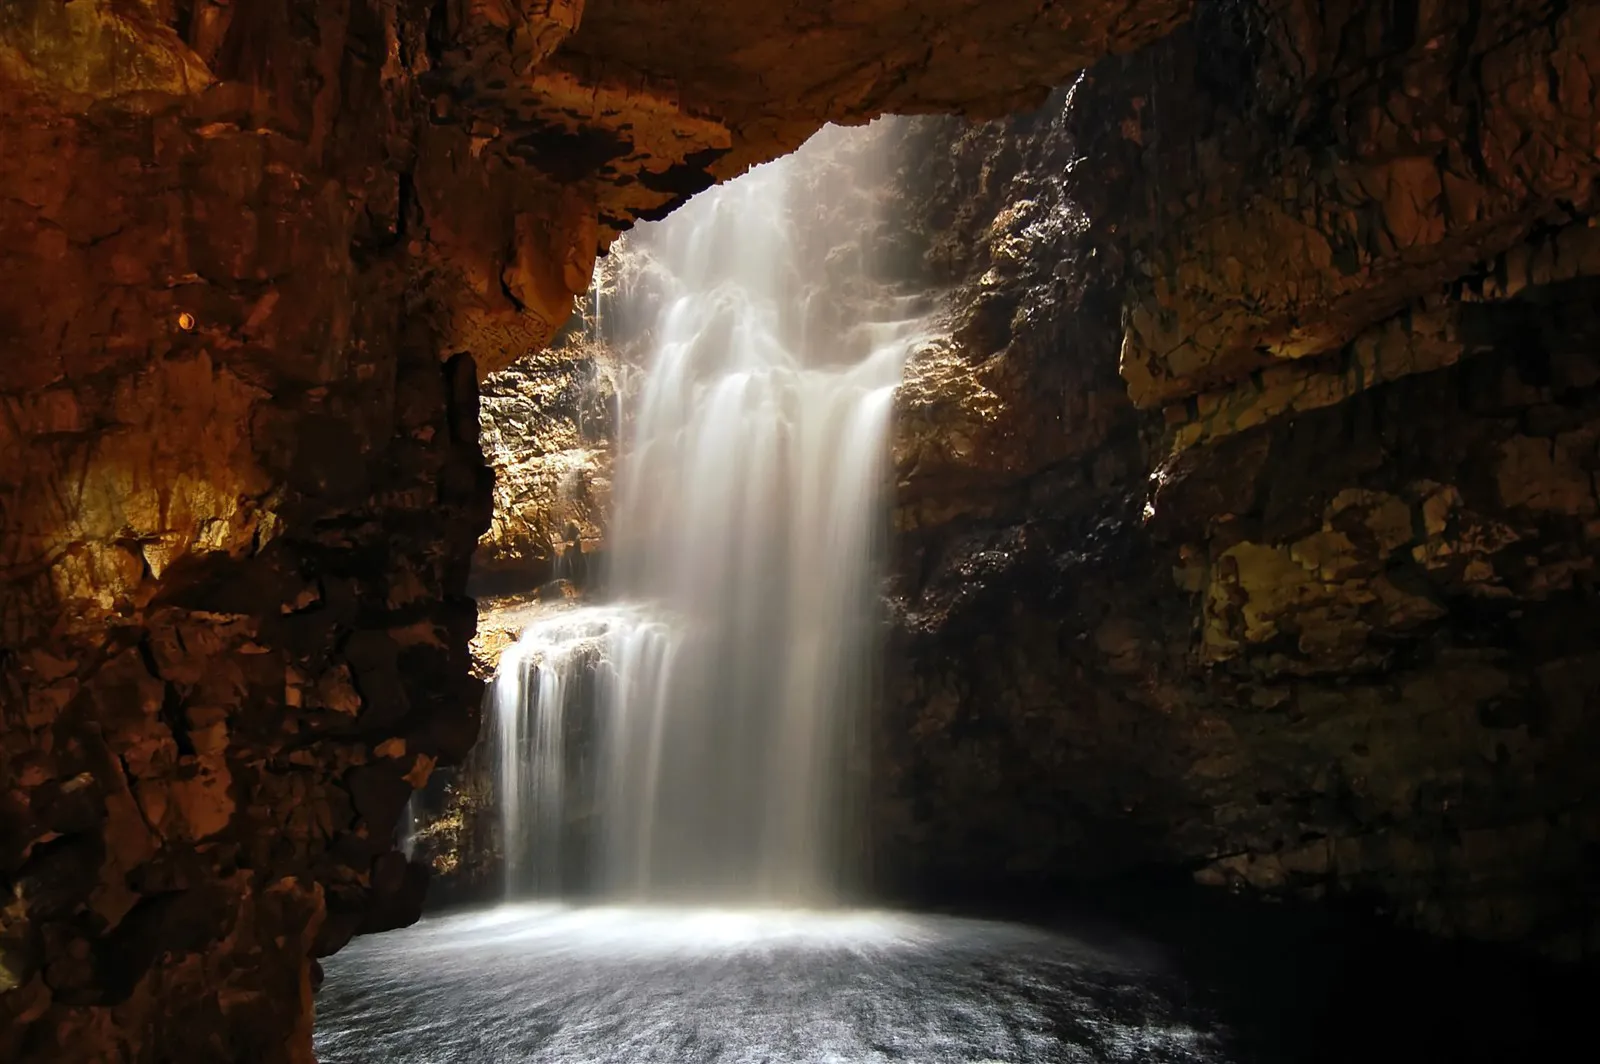 Smoo Cave, Sutherland, Highlands of Scotland